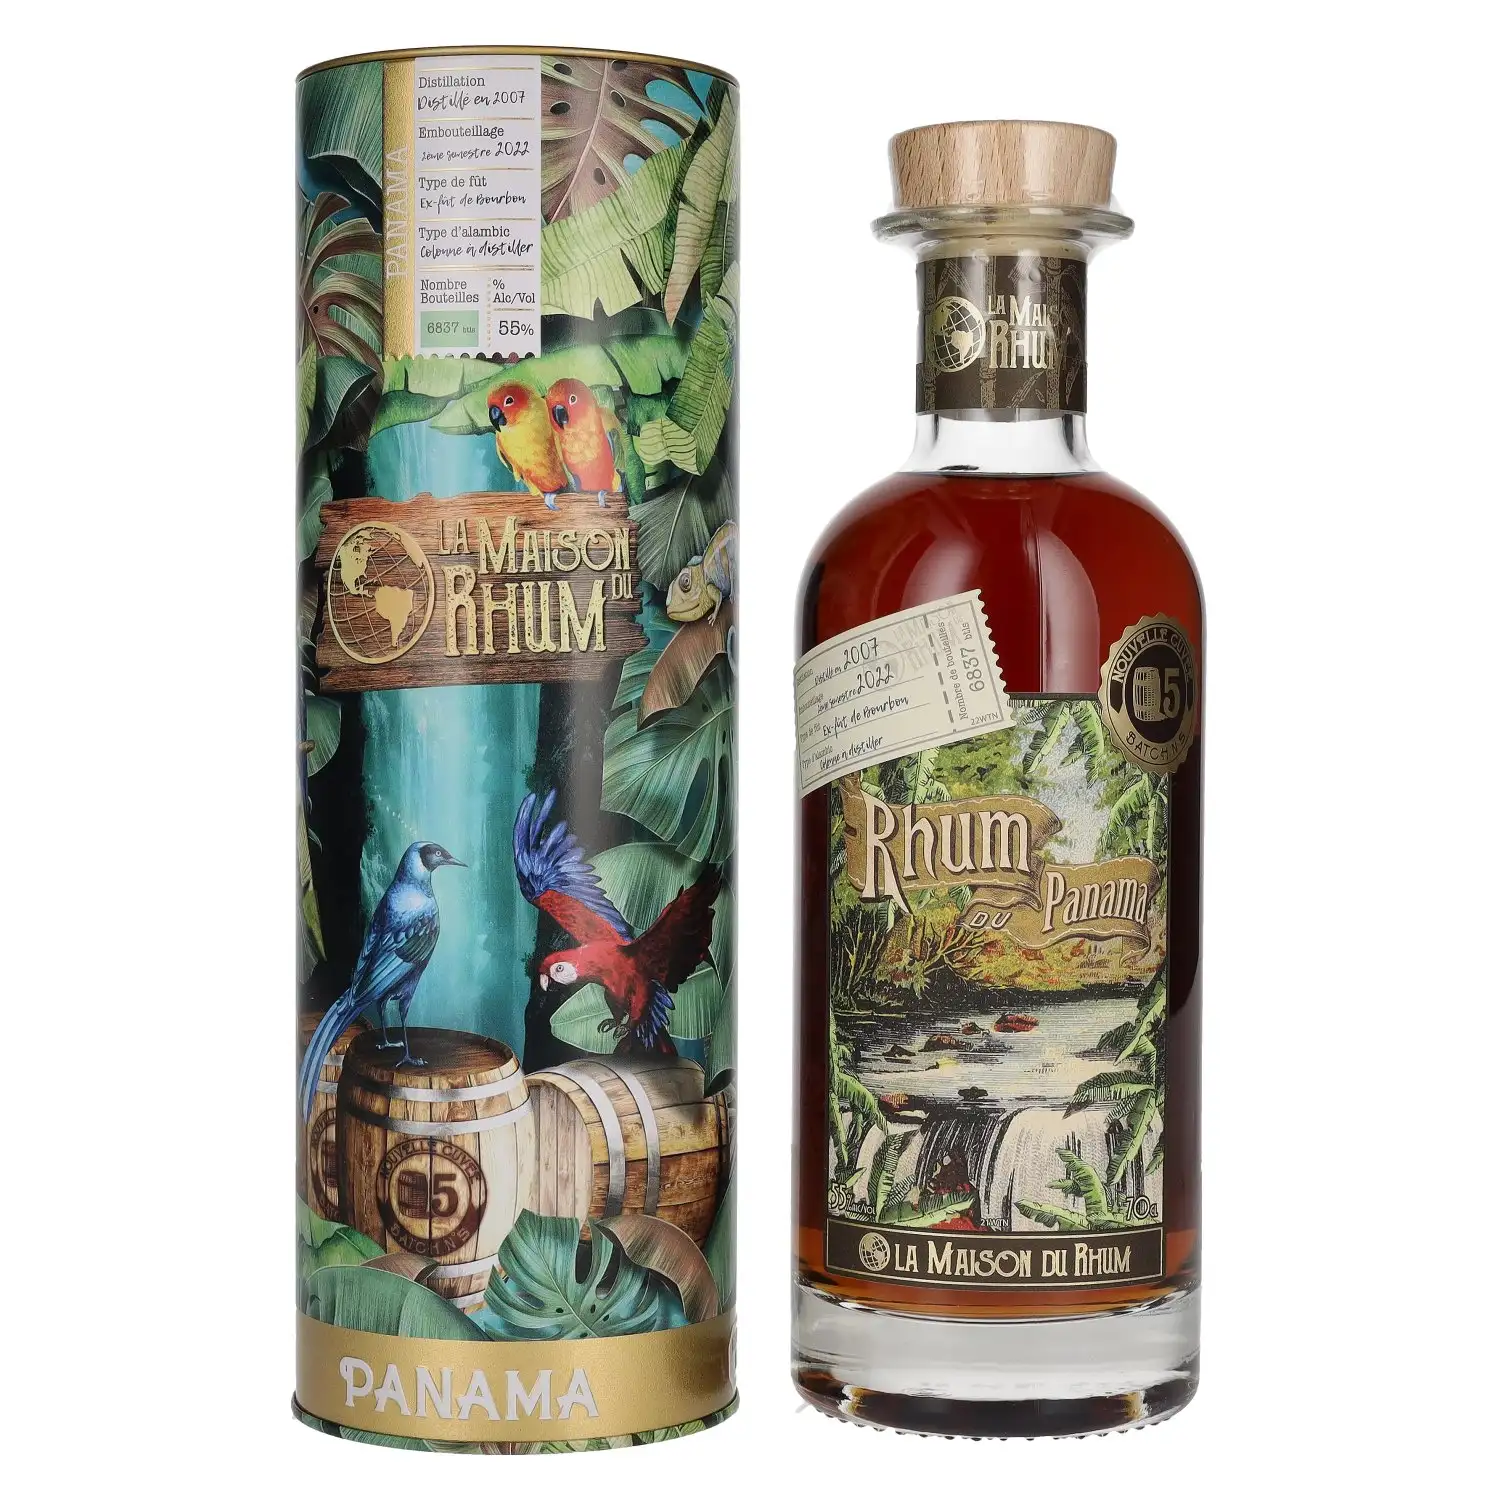 Image of the front of the bottle of the rum La Maison du Rhum